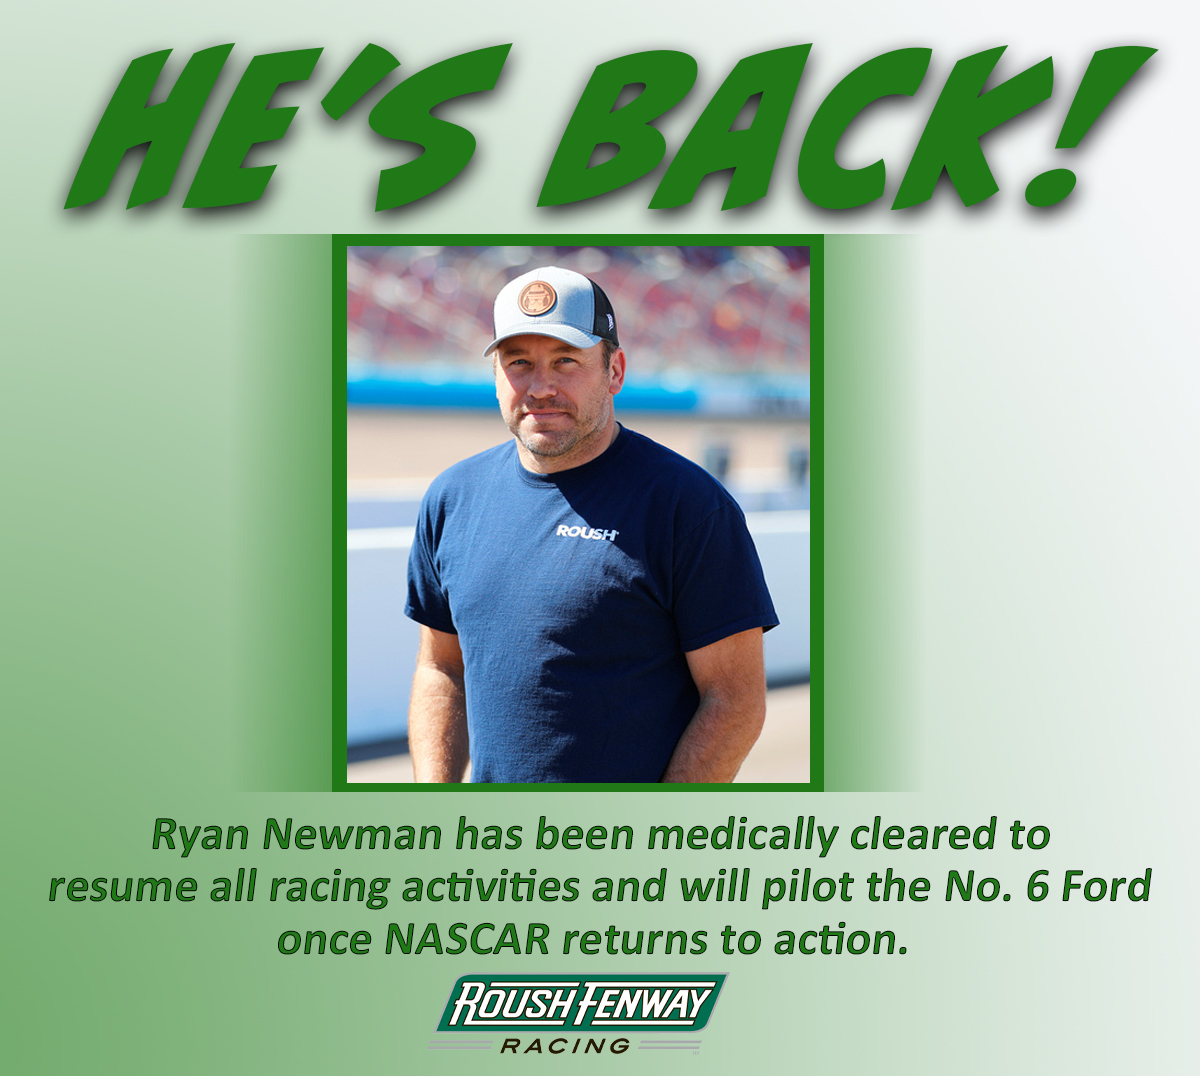 Roush Fenway Statement on Ryan Newman